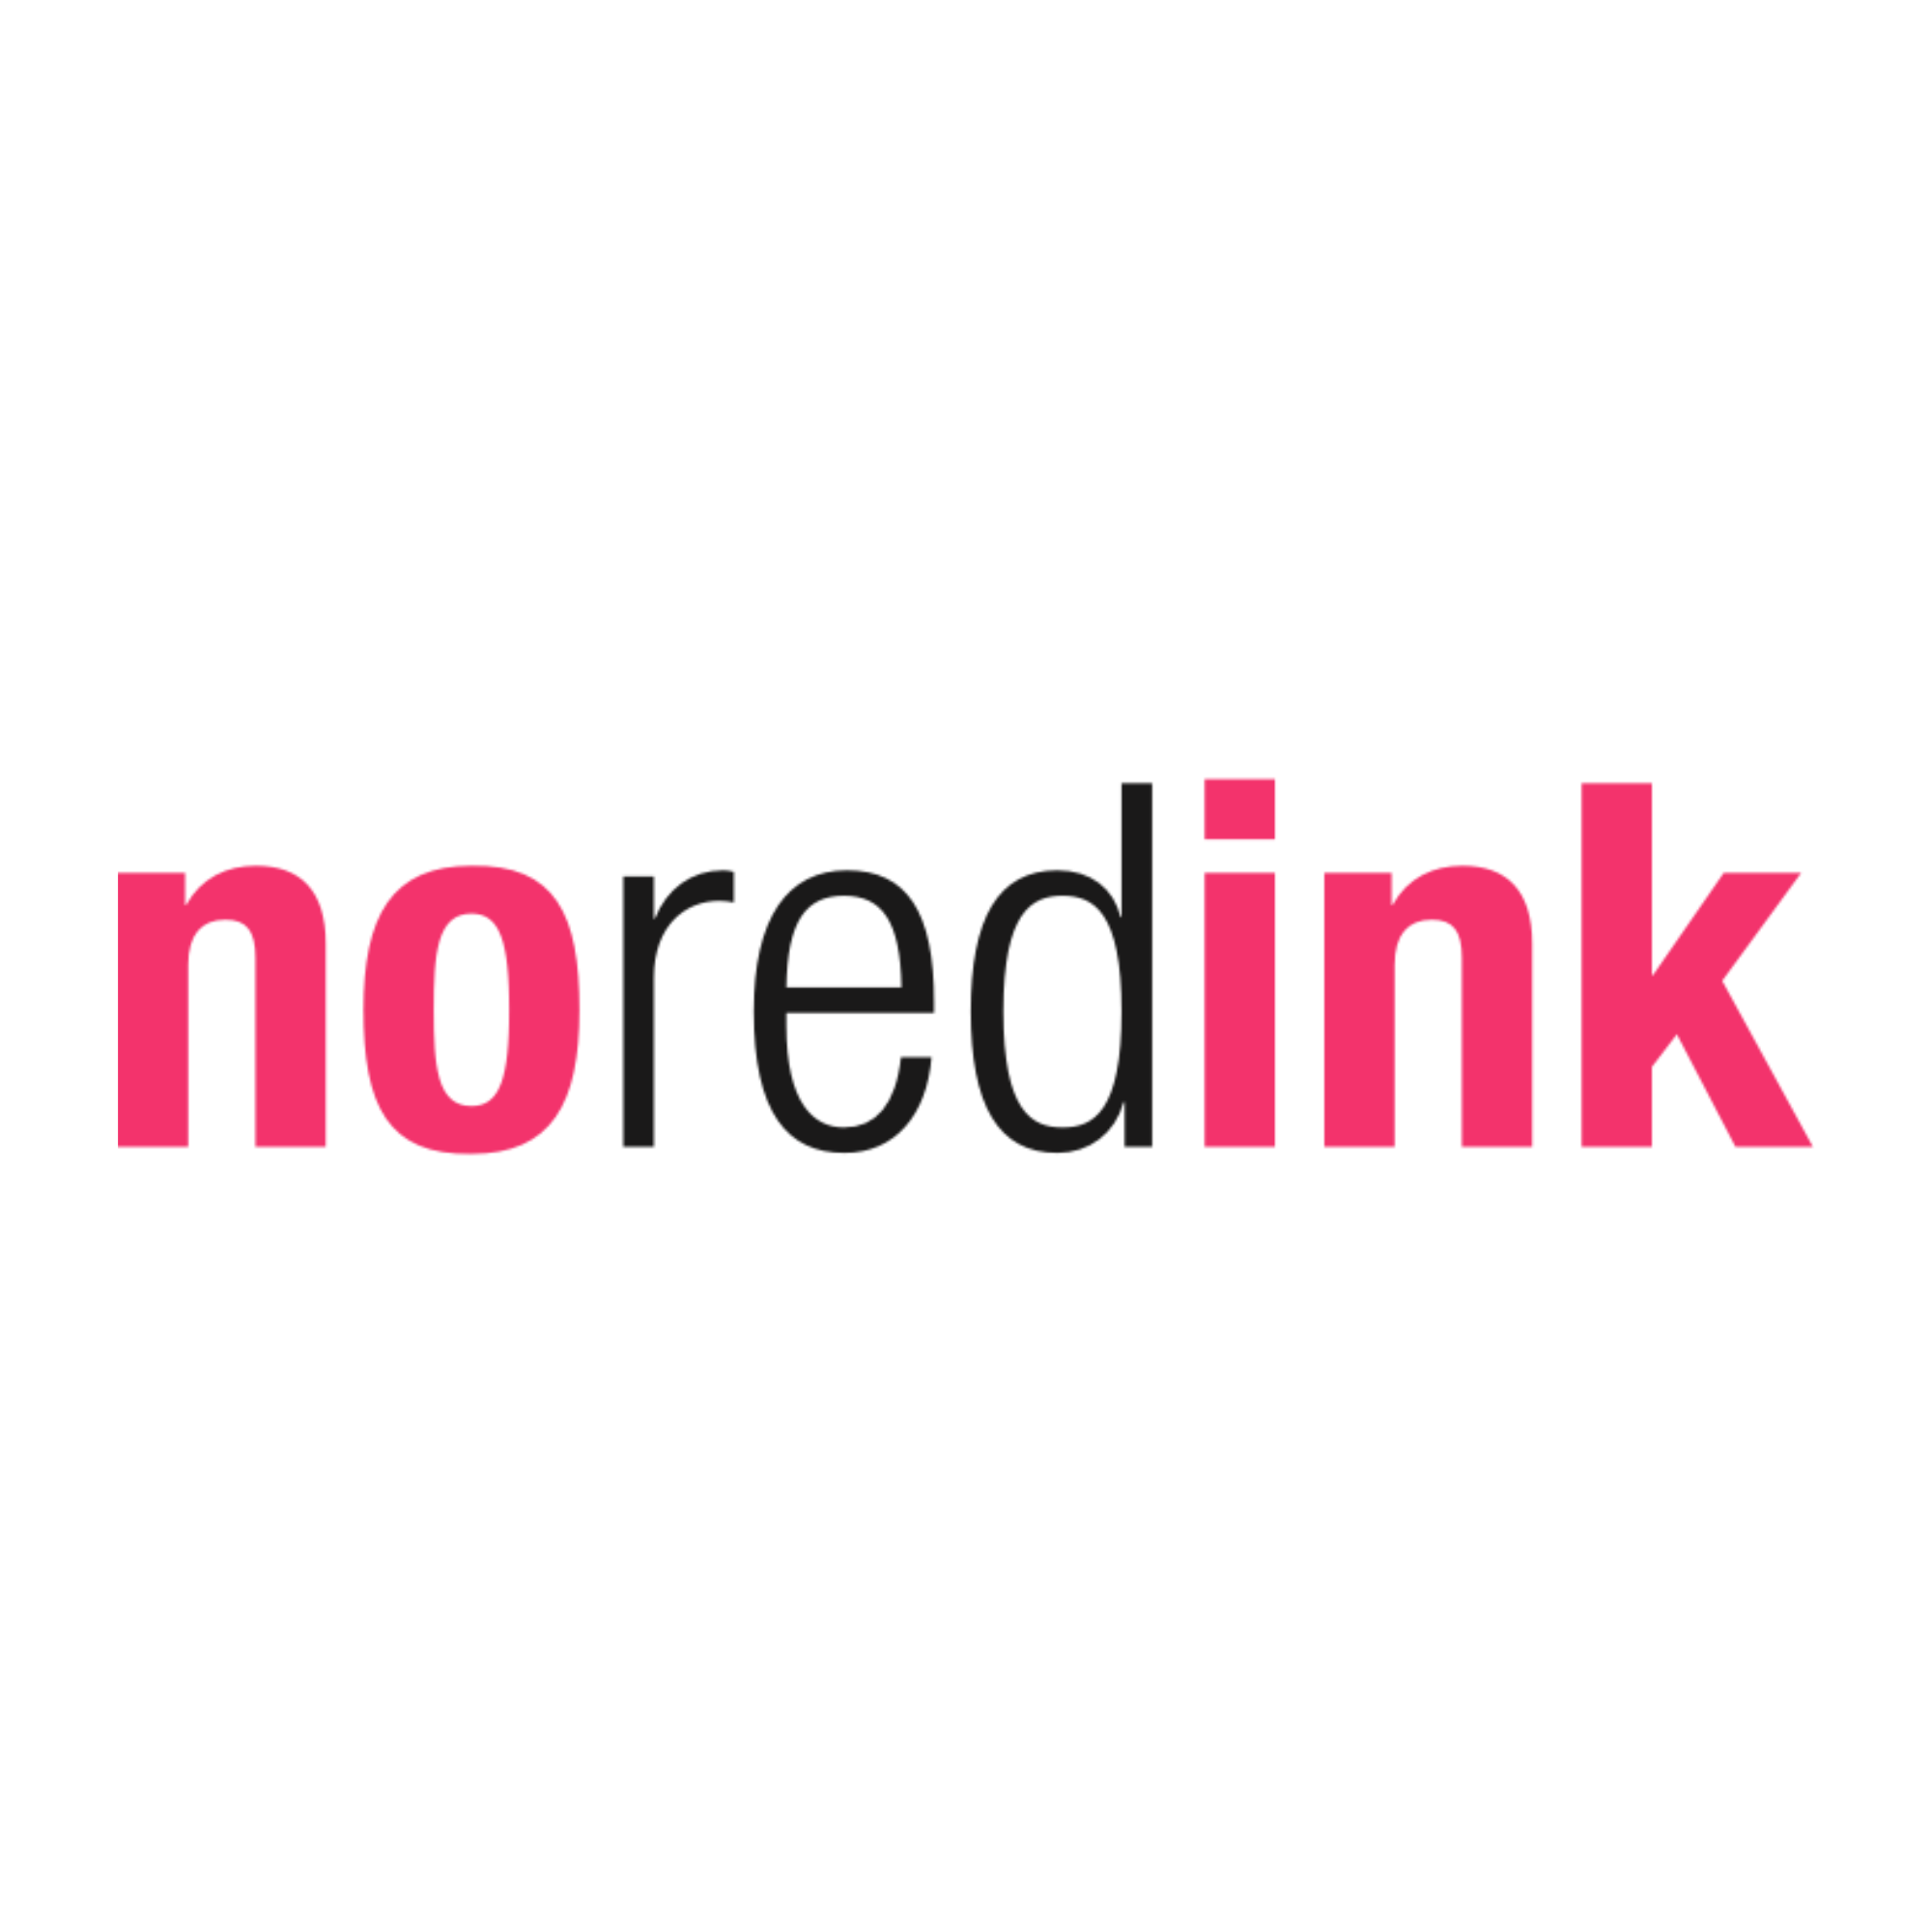 NoRedInk 4x4 Logo